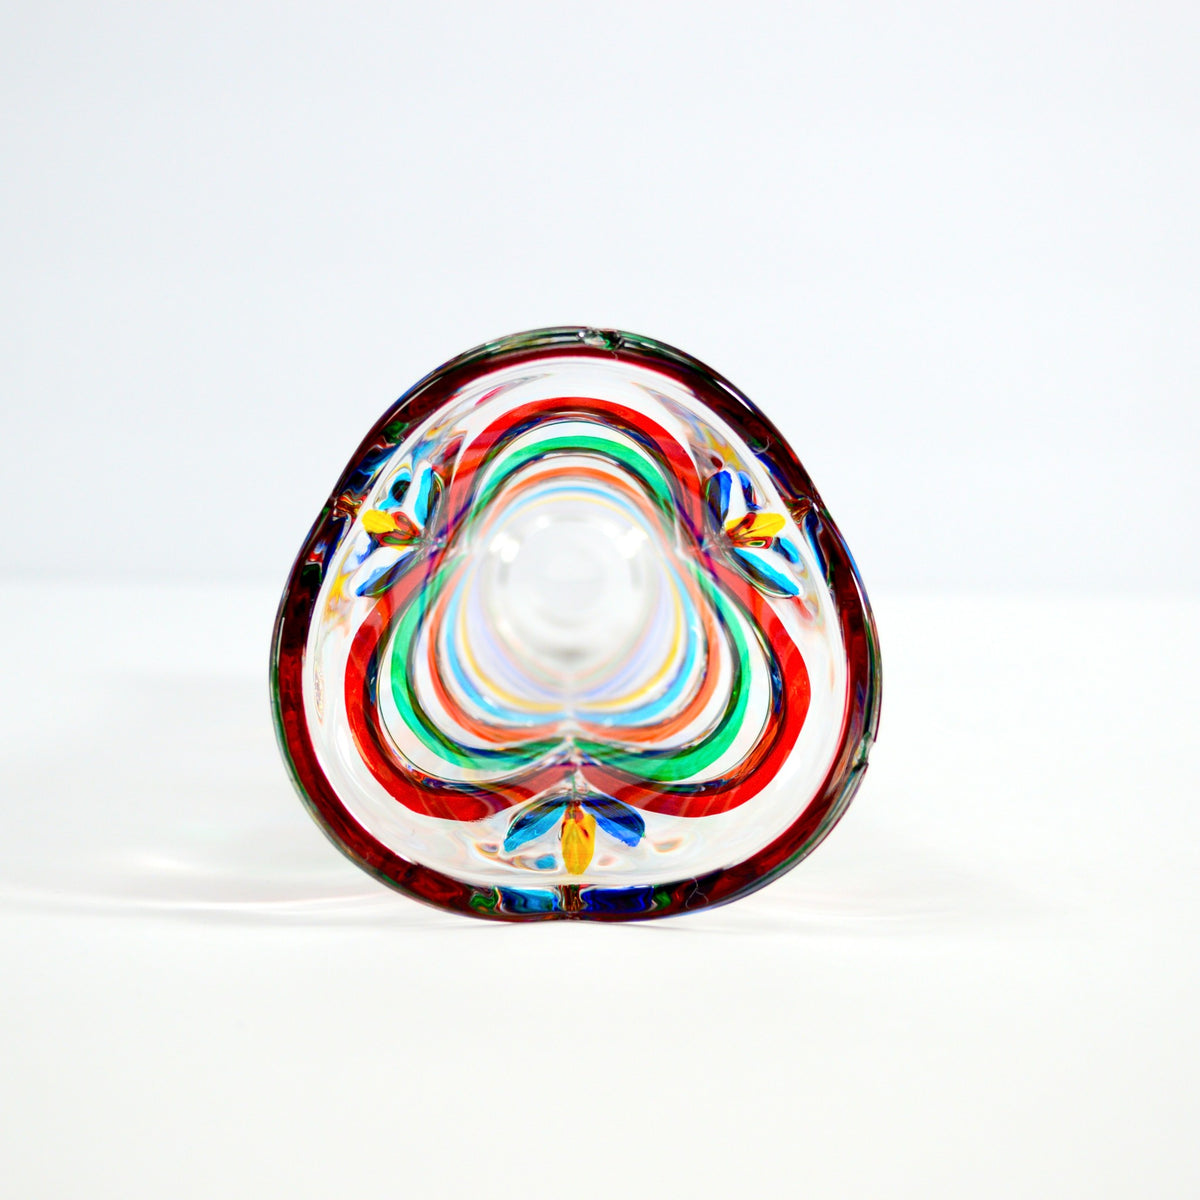 Starburst Bud Vase, Hand Painted Italian Crystal, Made in Italy - My Italian Decor